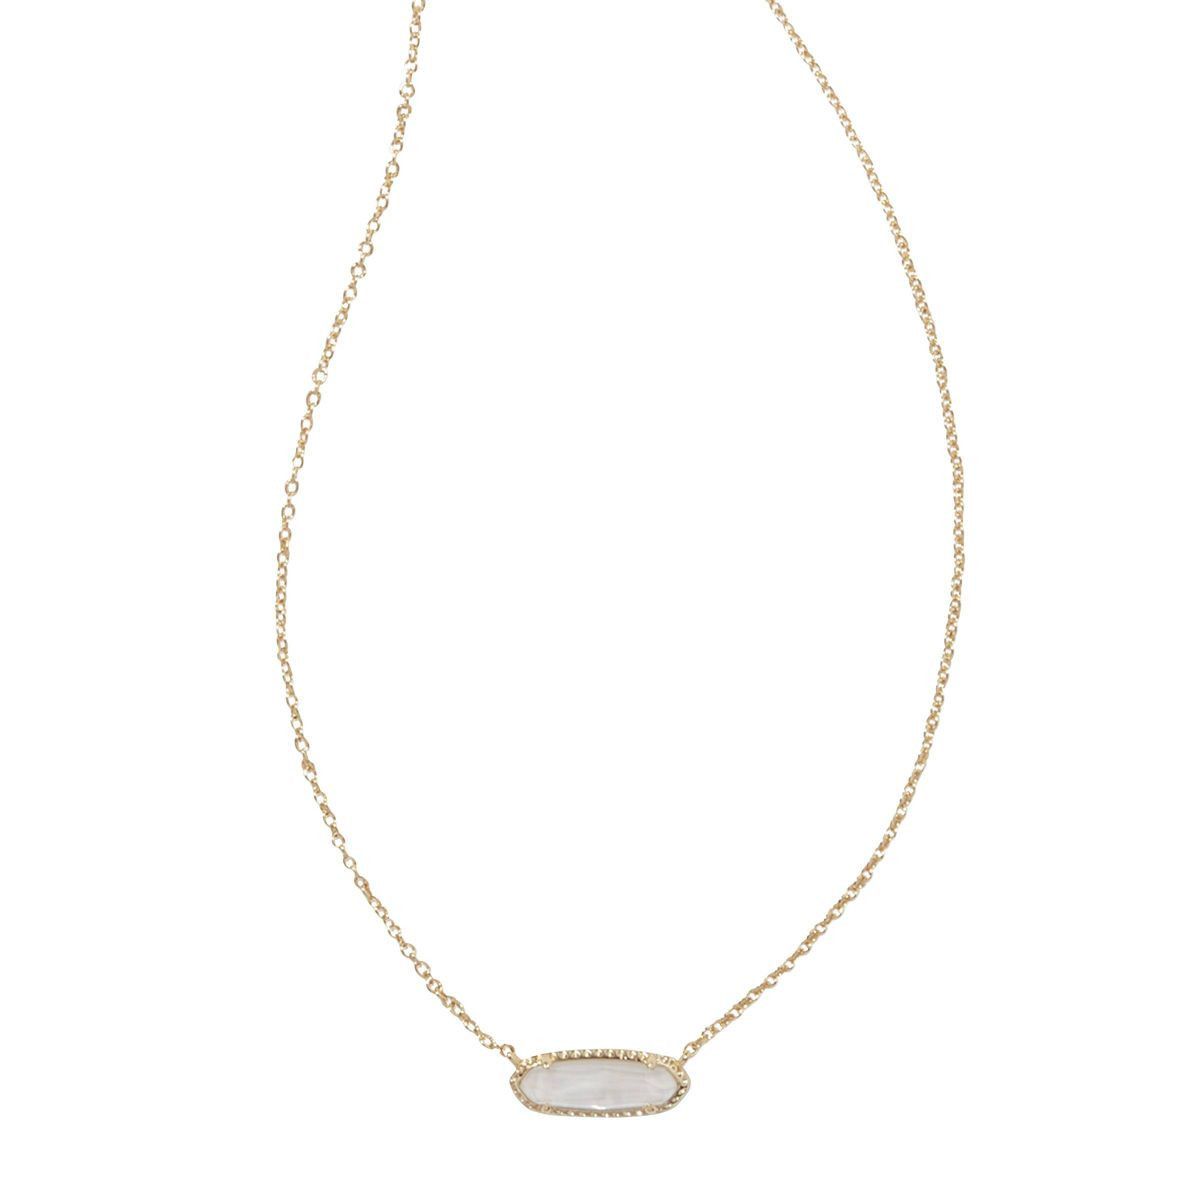 Kendra Scott Eva 14K Gold Over Brass Pendant Necklace - Mother of Pearl | Target